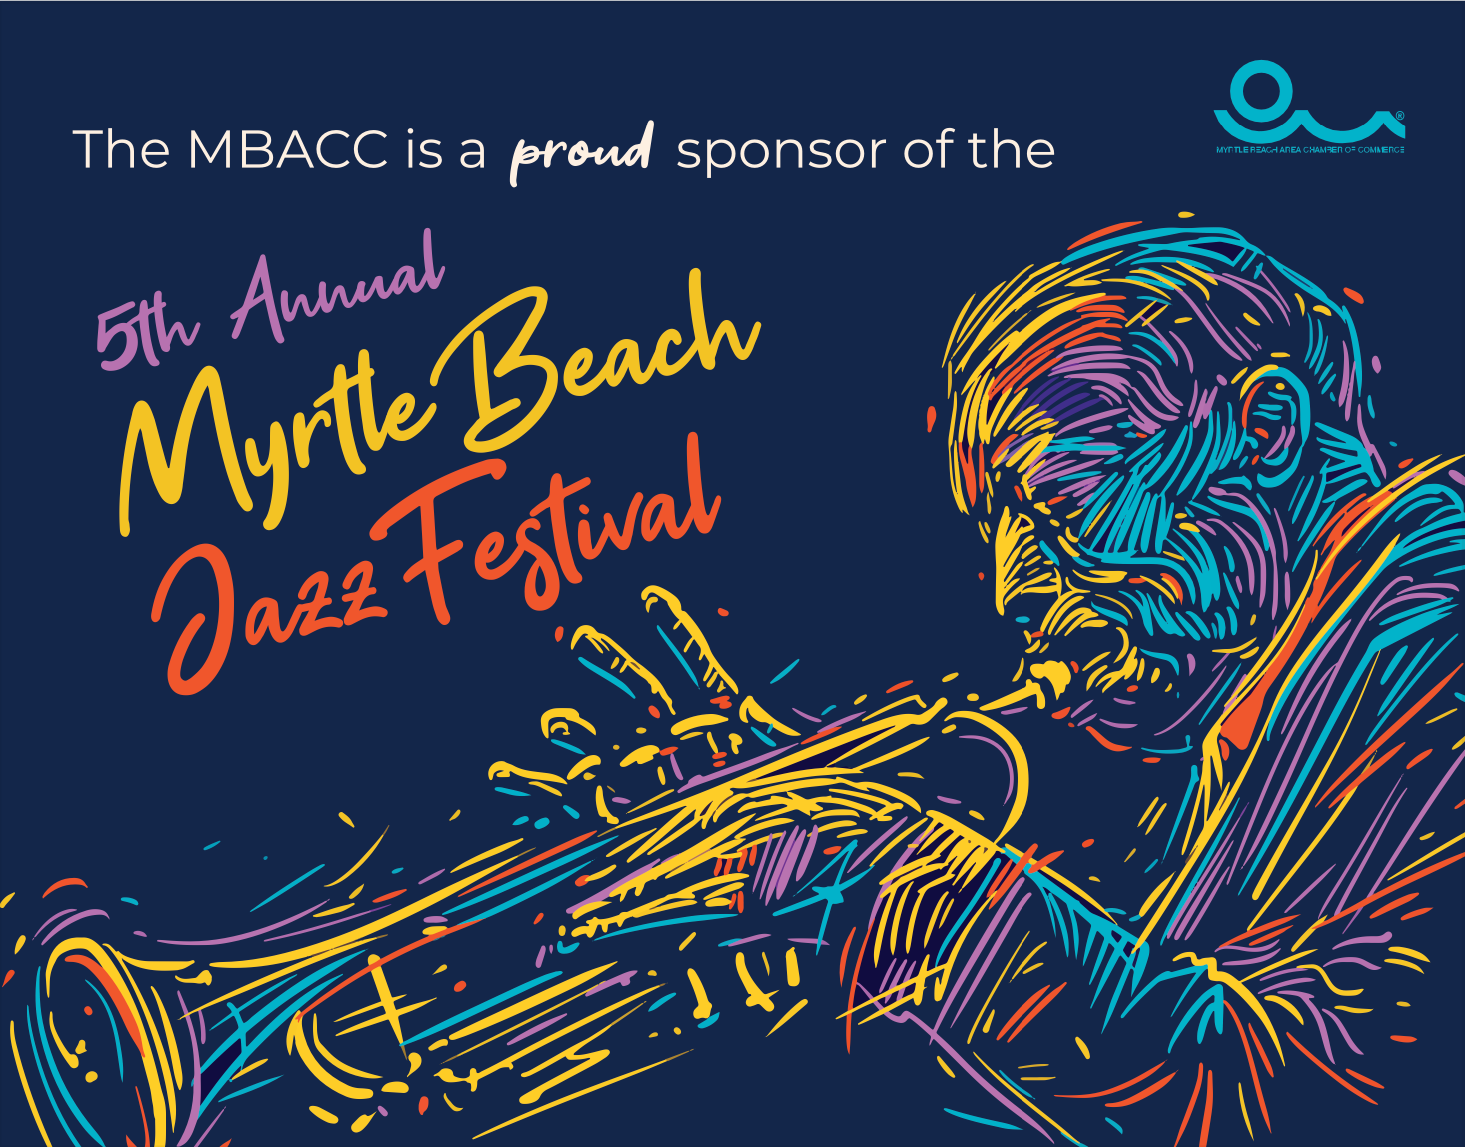 Myrtle Beach Jazz Festival